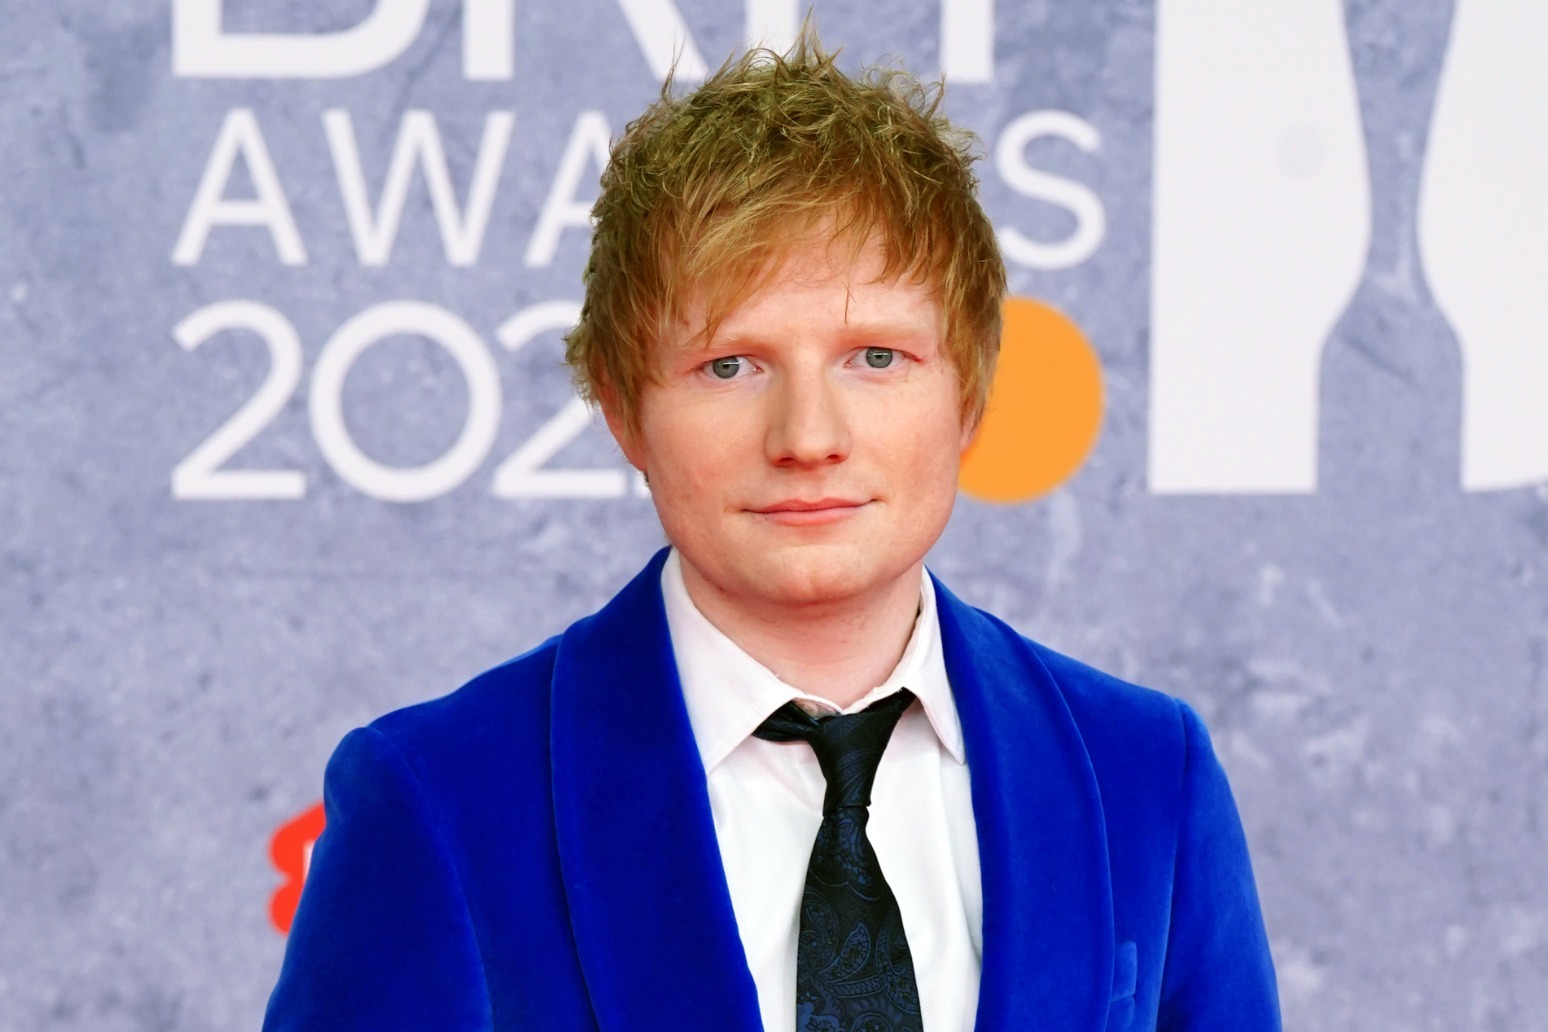 Rich List: Ed Sheeran could become first British billionaire musician 